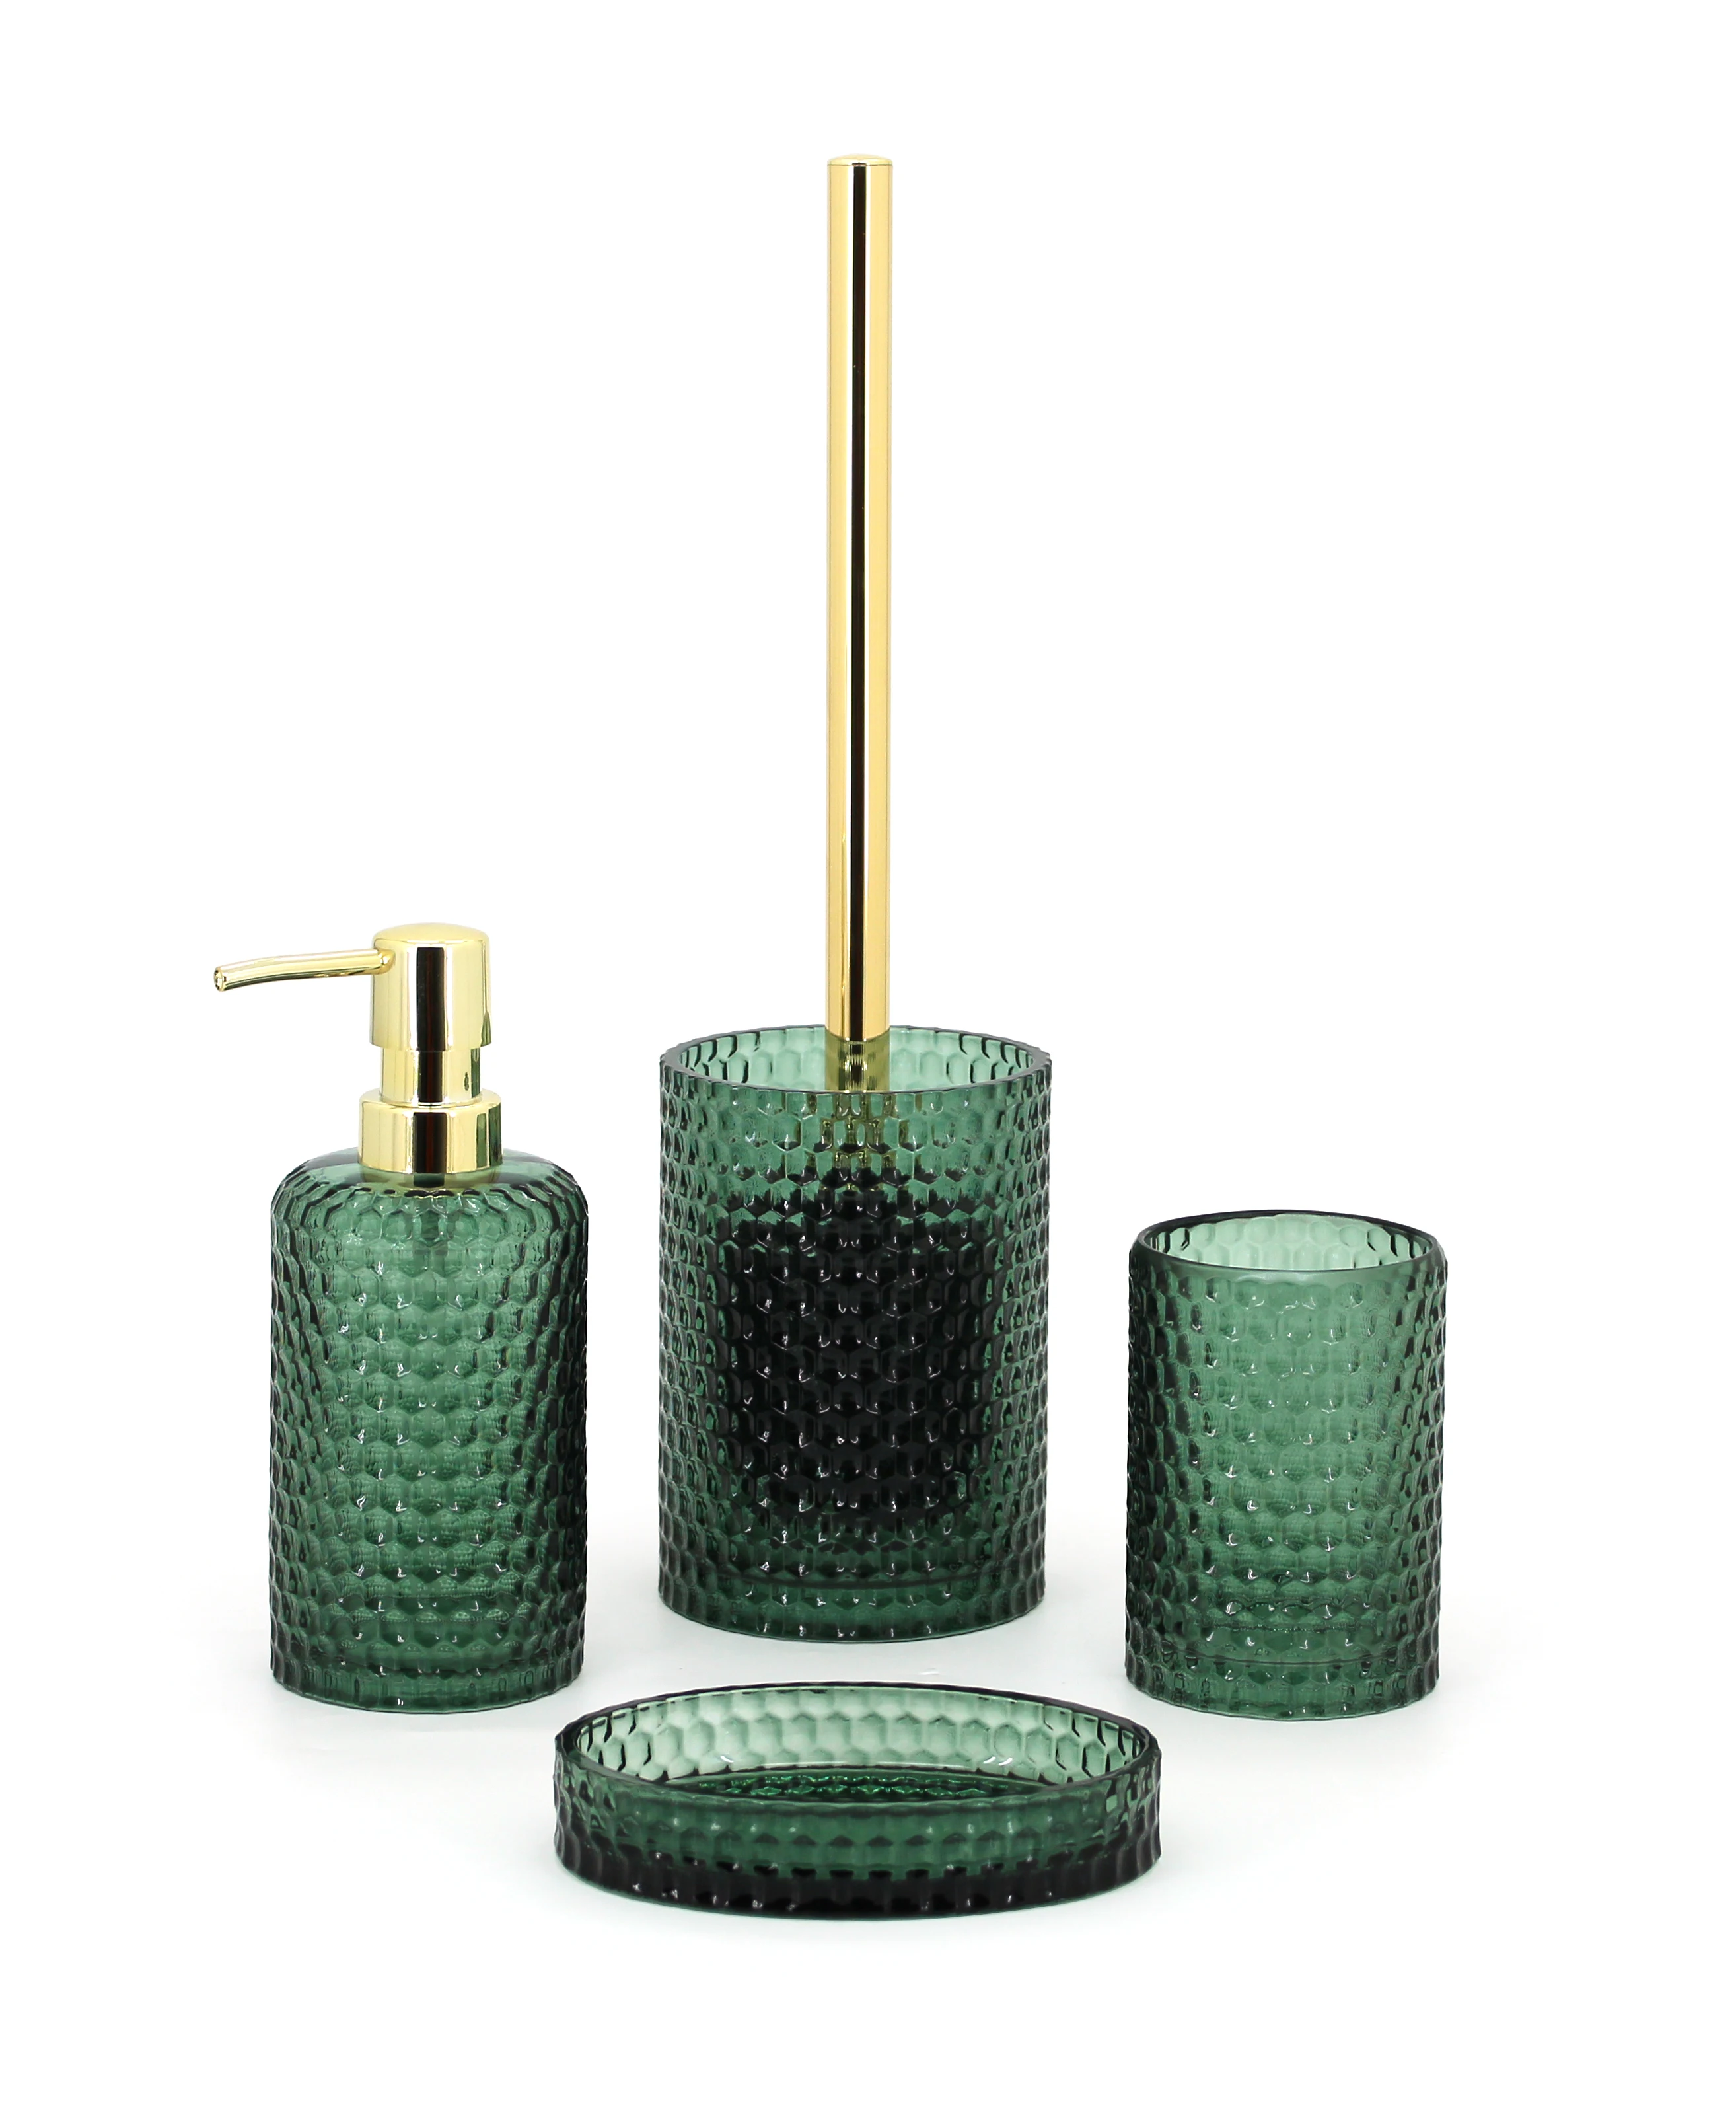 2021 Hot New Products Luxury Embossed Pattern Green Glass Bathroom Accessories Bath Set Buy Luxury Bathroom Sets